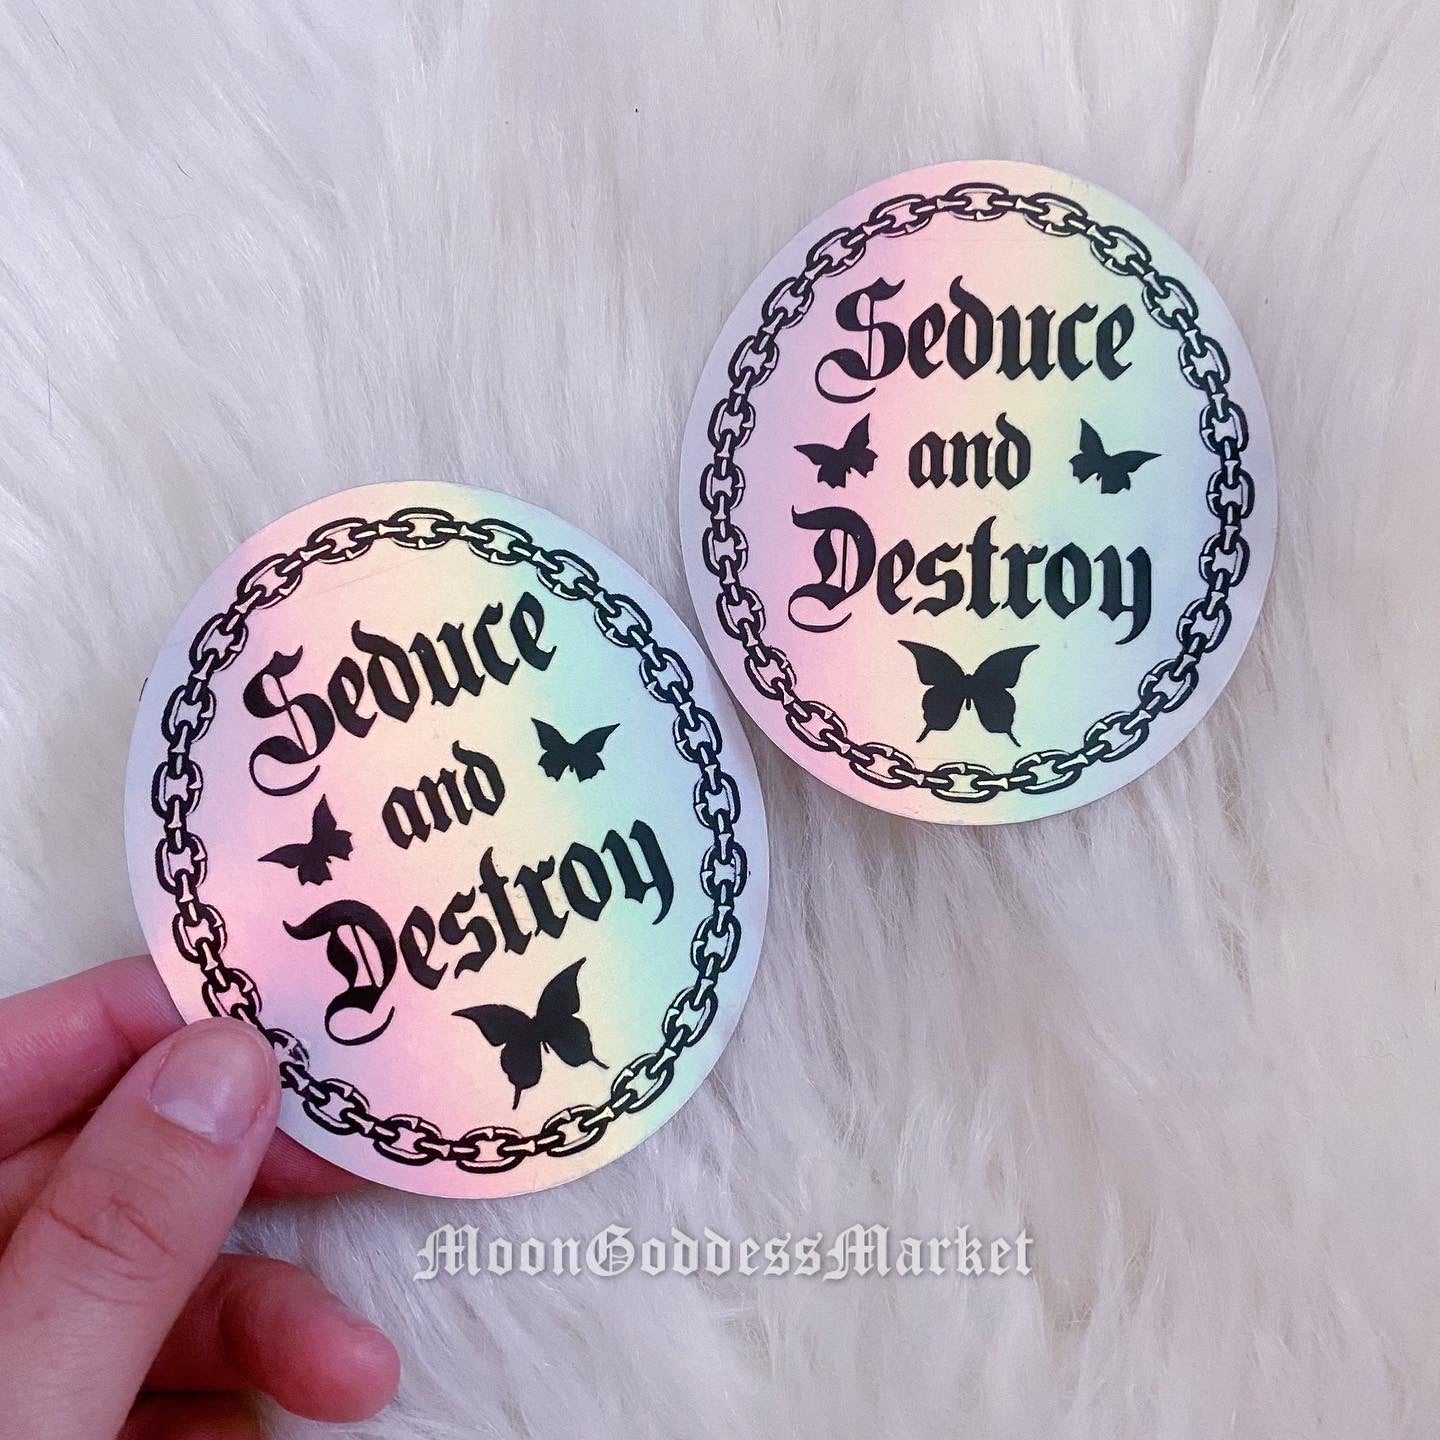 Seduce and Destroy Holographic Sticker 4” - Moon Goddess Market